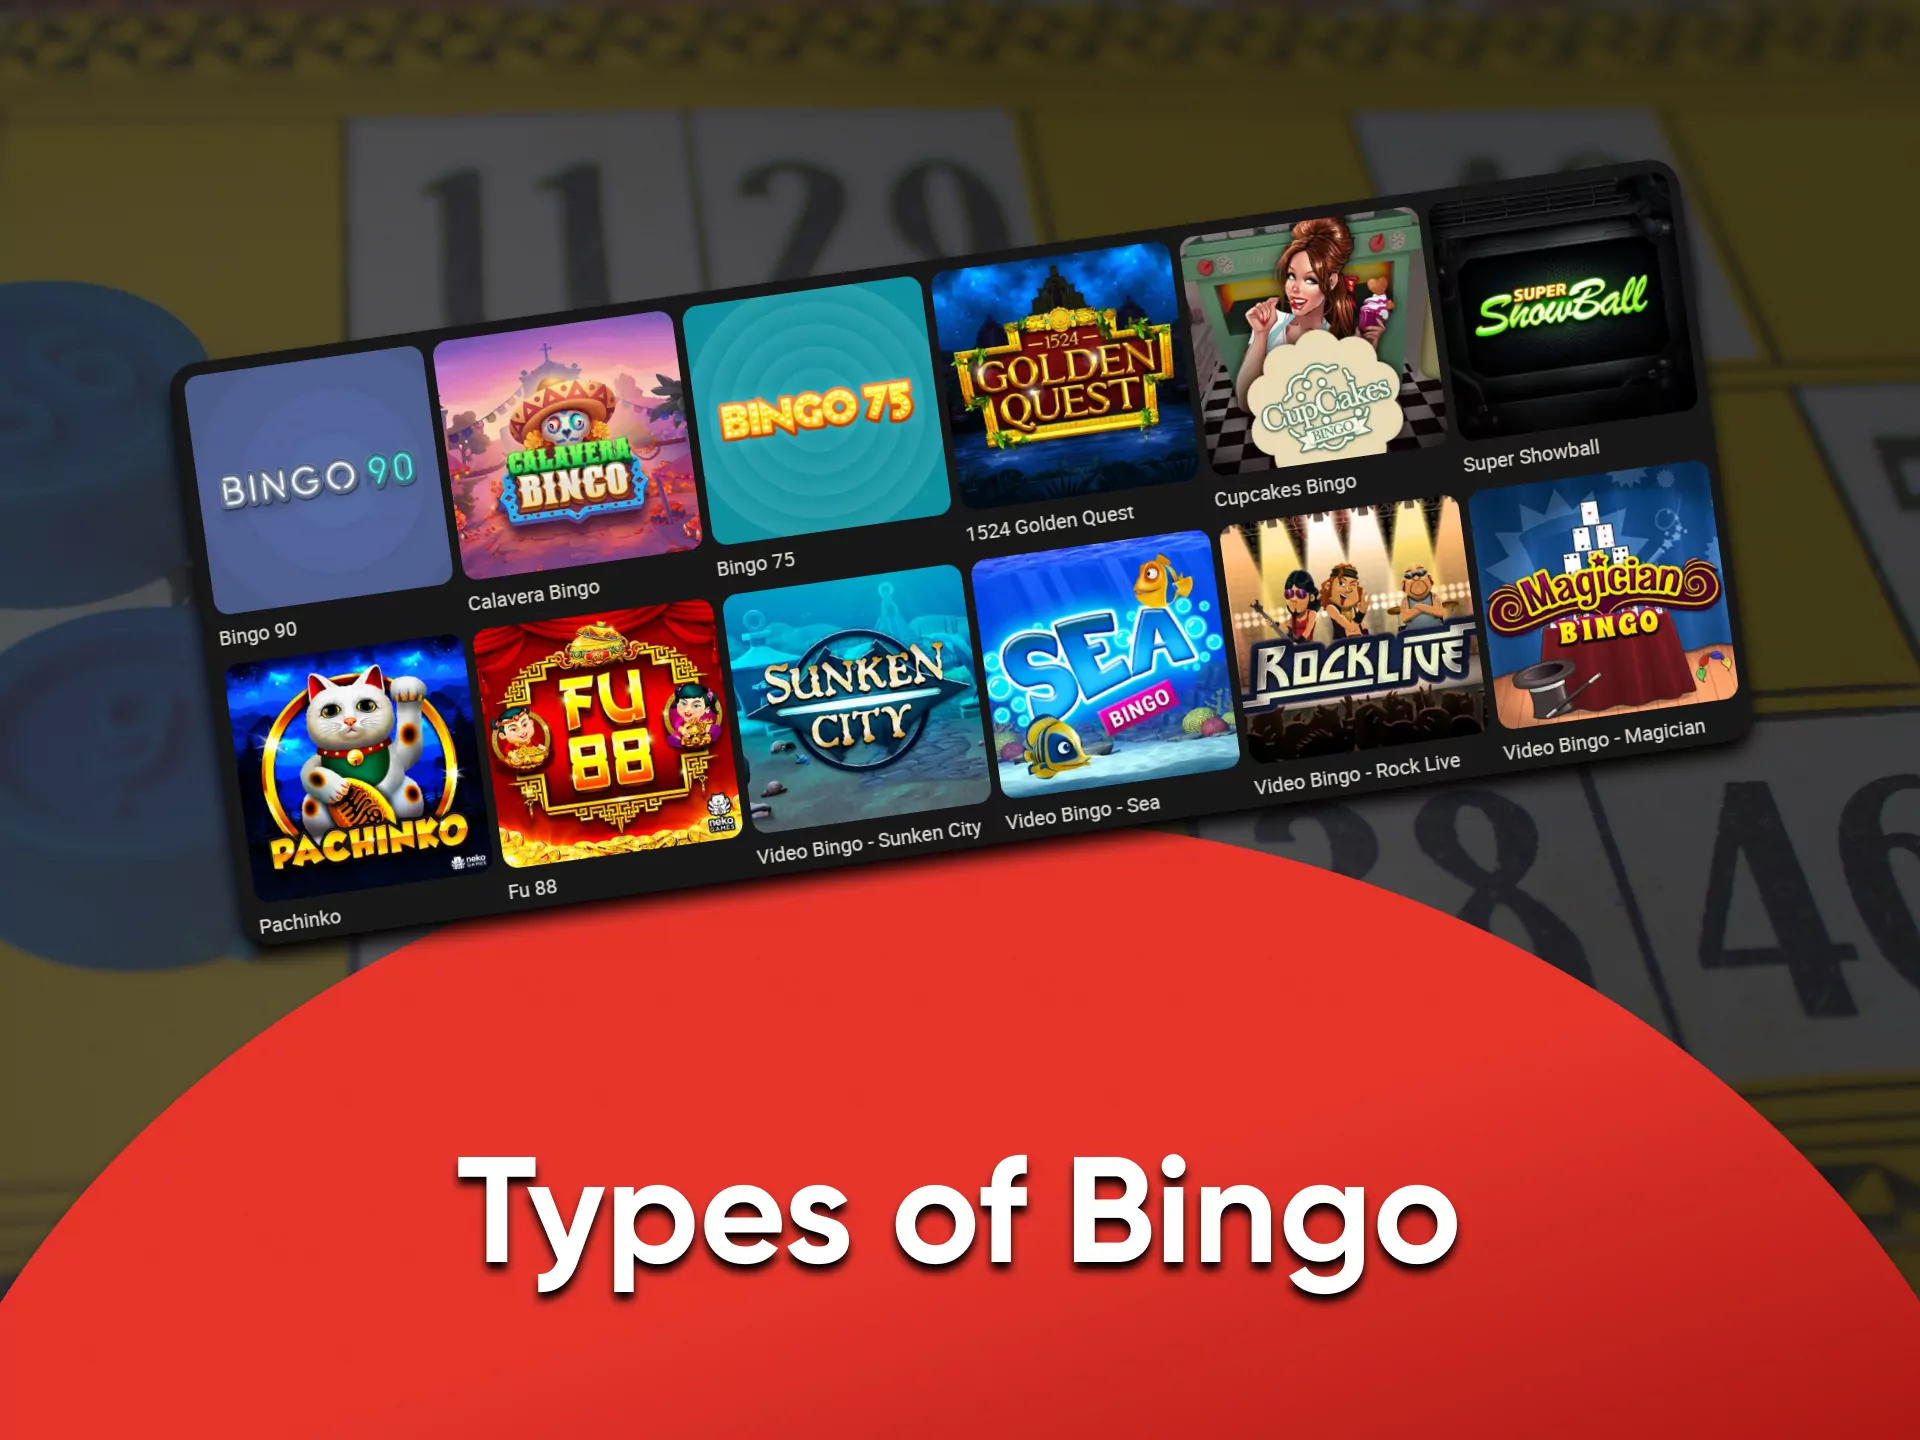 Play your favorite Bingo variant.